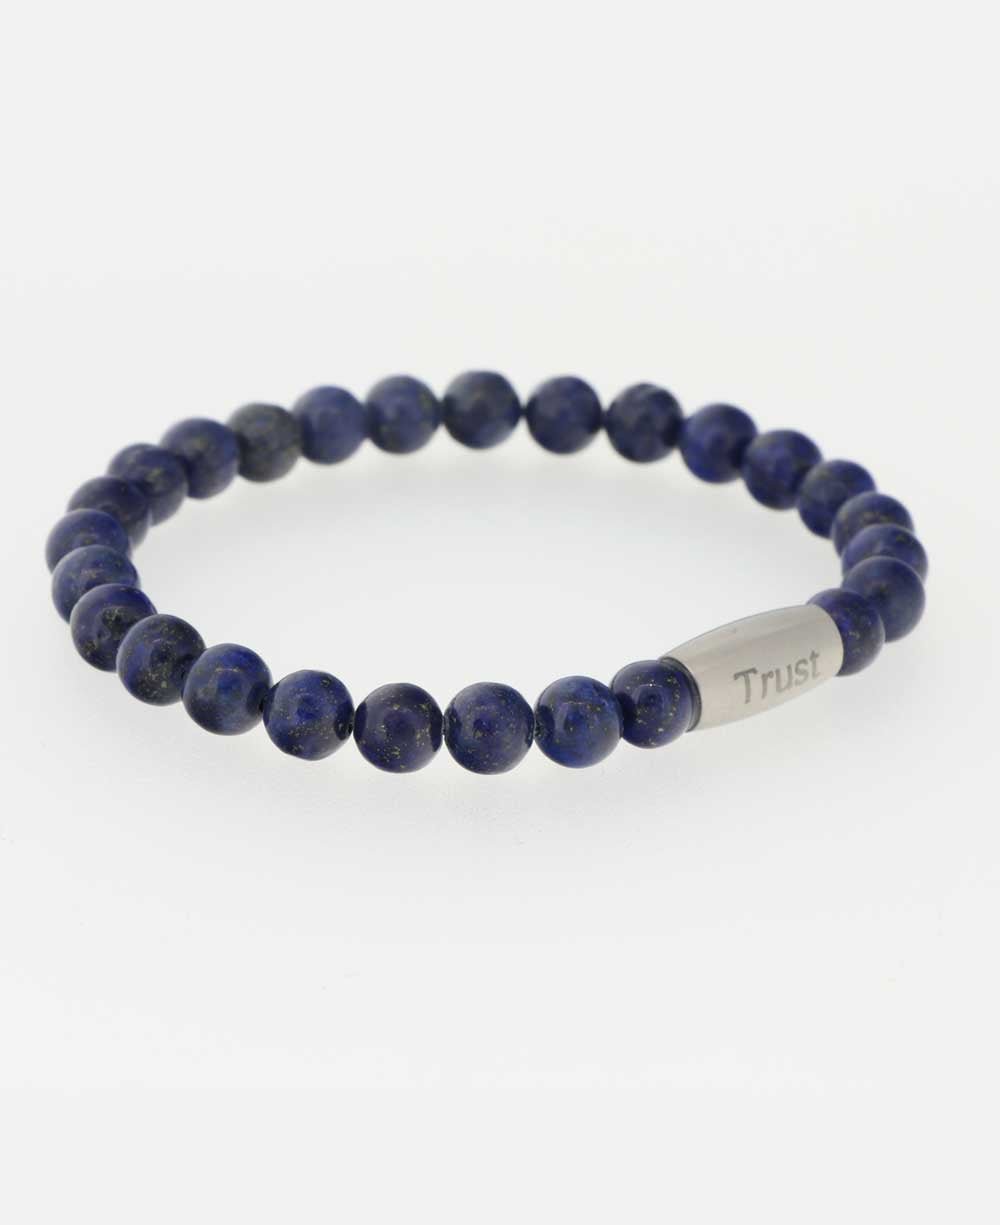 Trust Lapis Gemstone Bracelet - Bracelets 7"